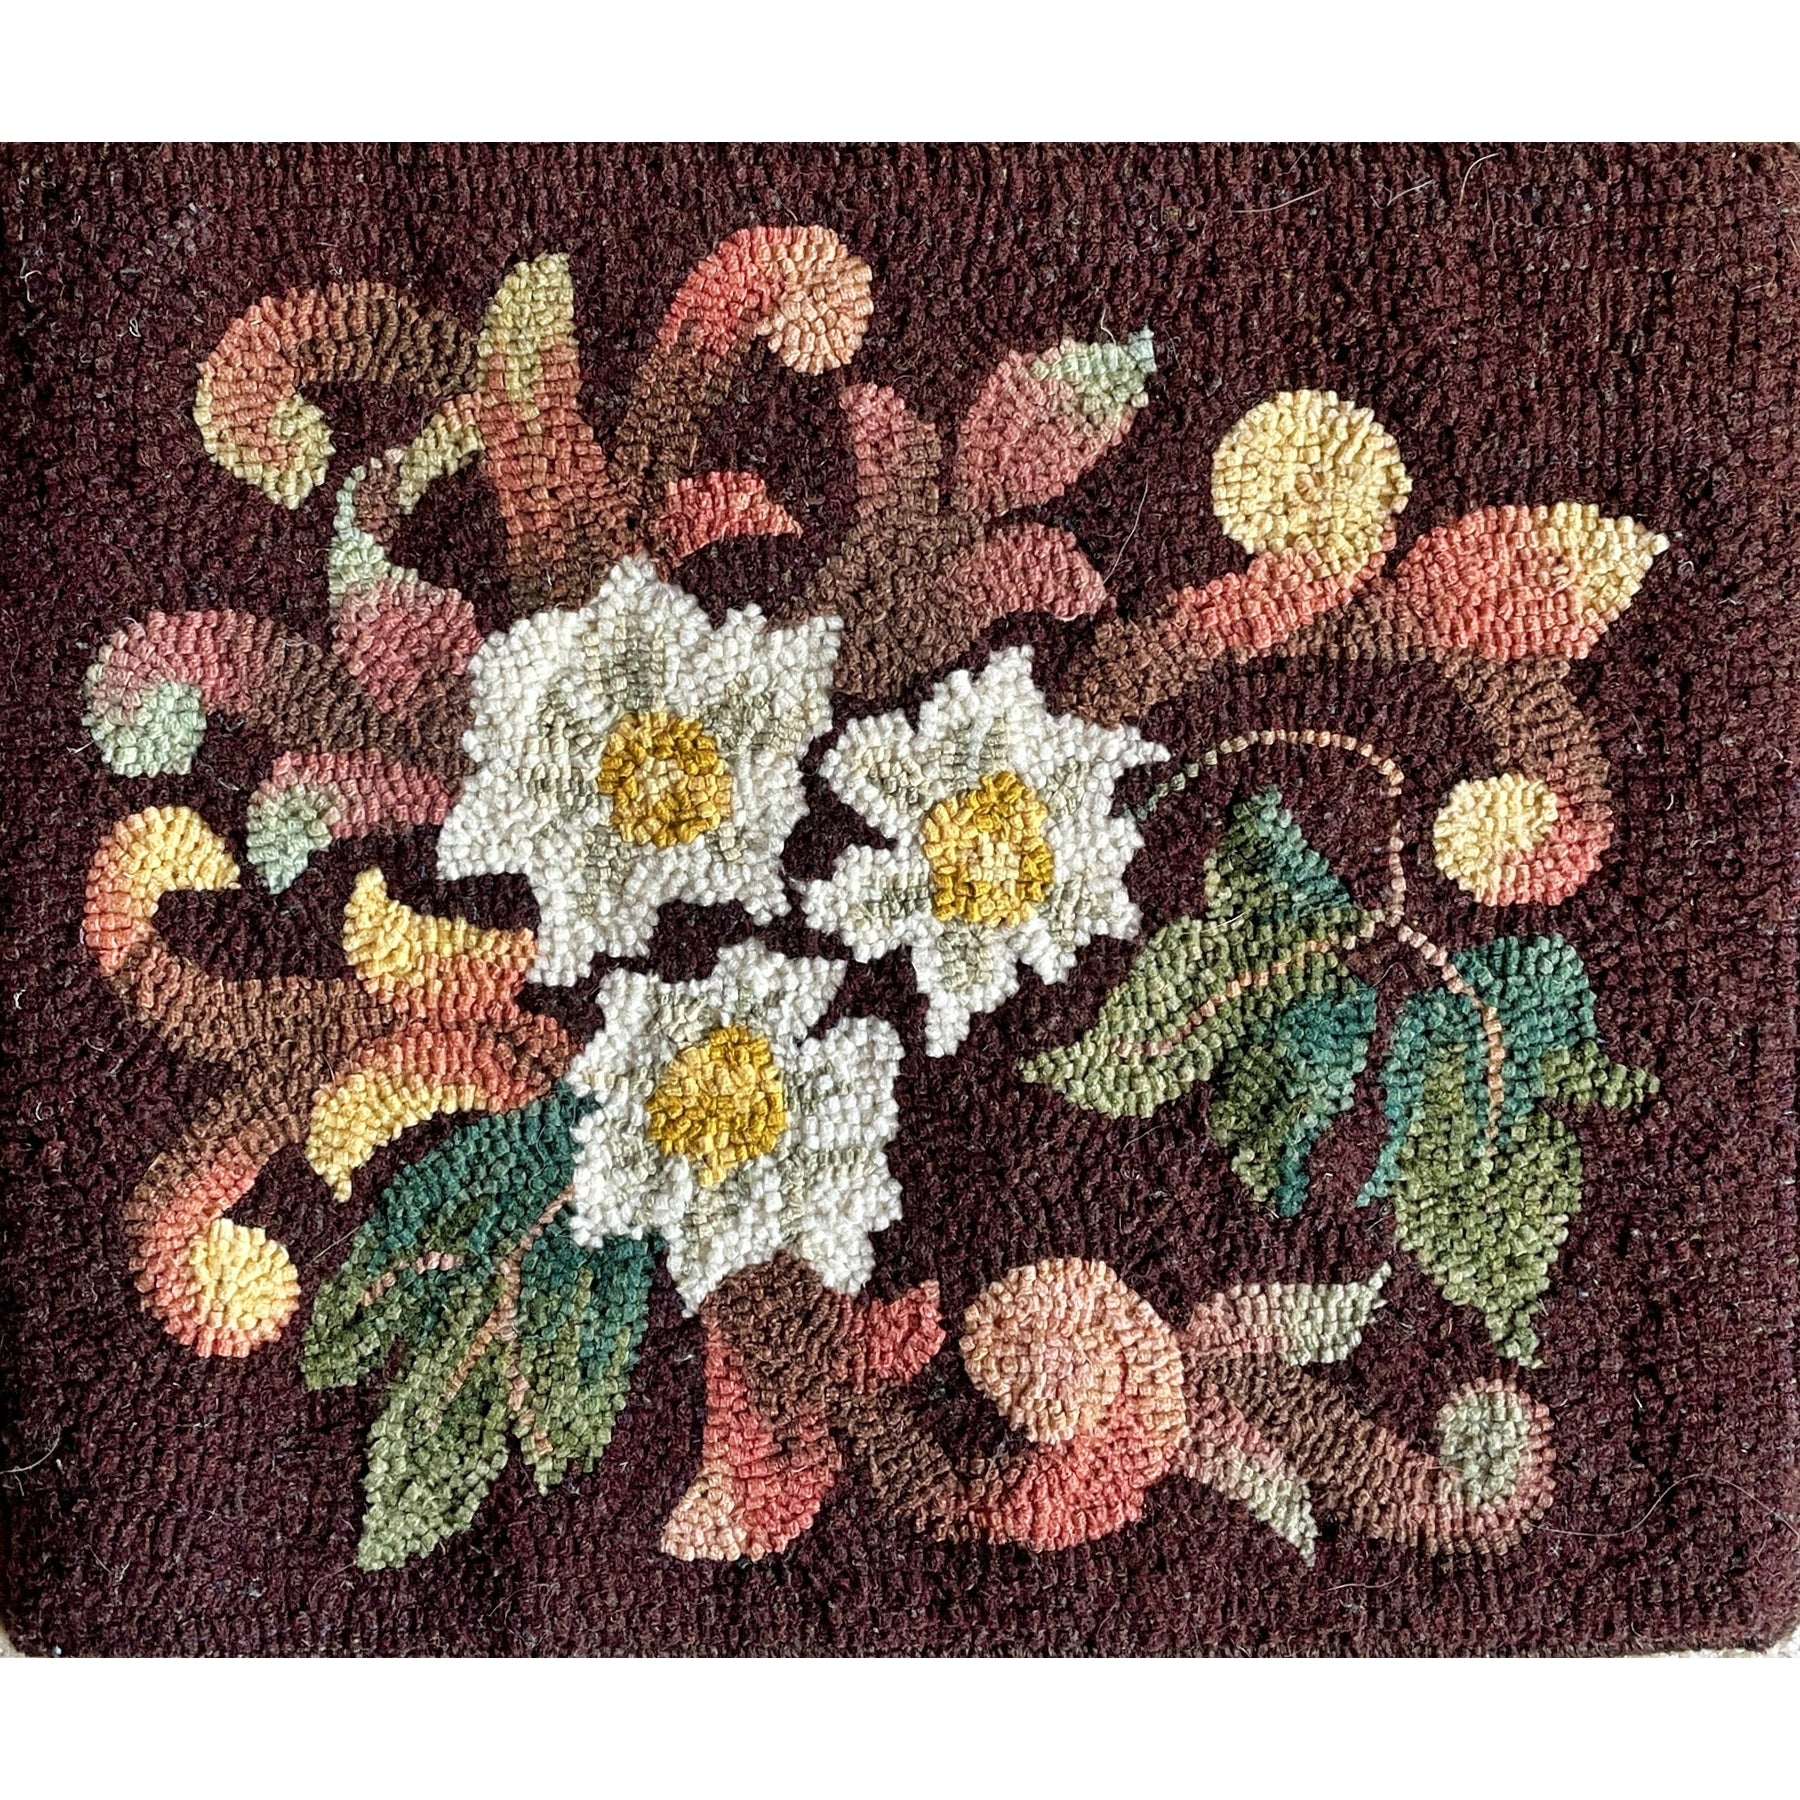 Karen, rug hooked by Brenda Patterson